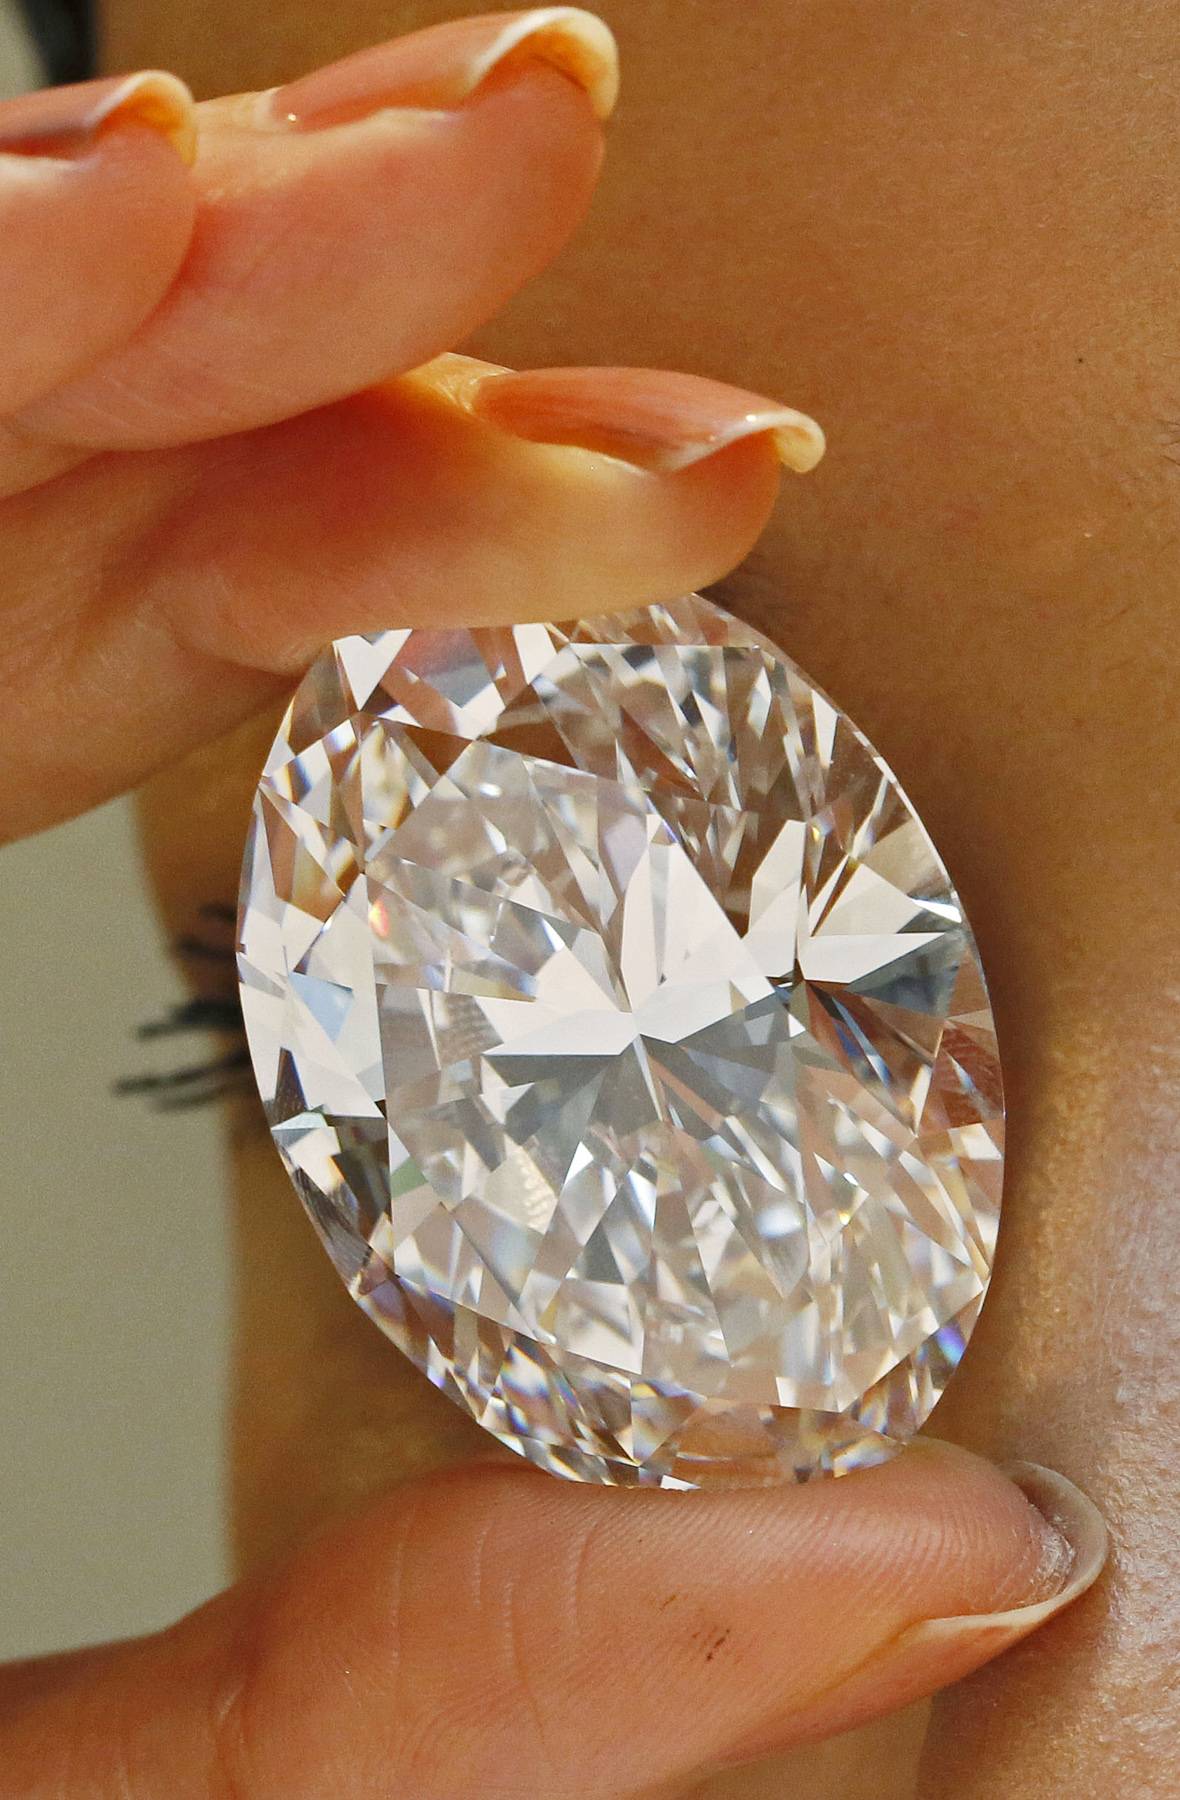 Now That's a Diamond